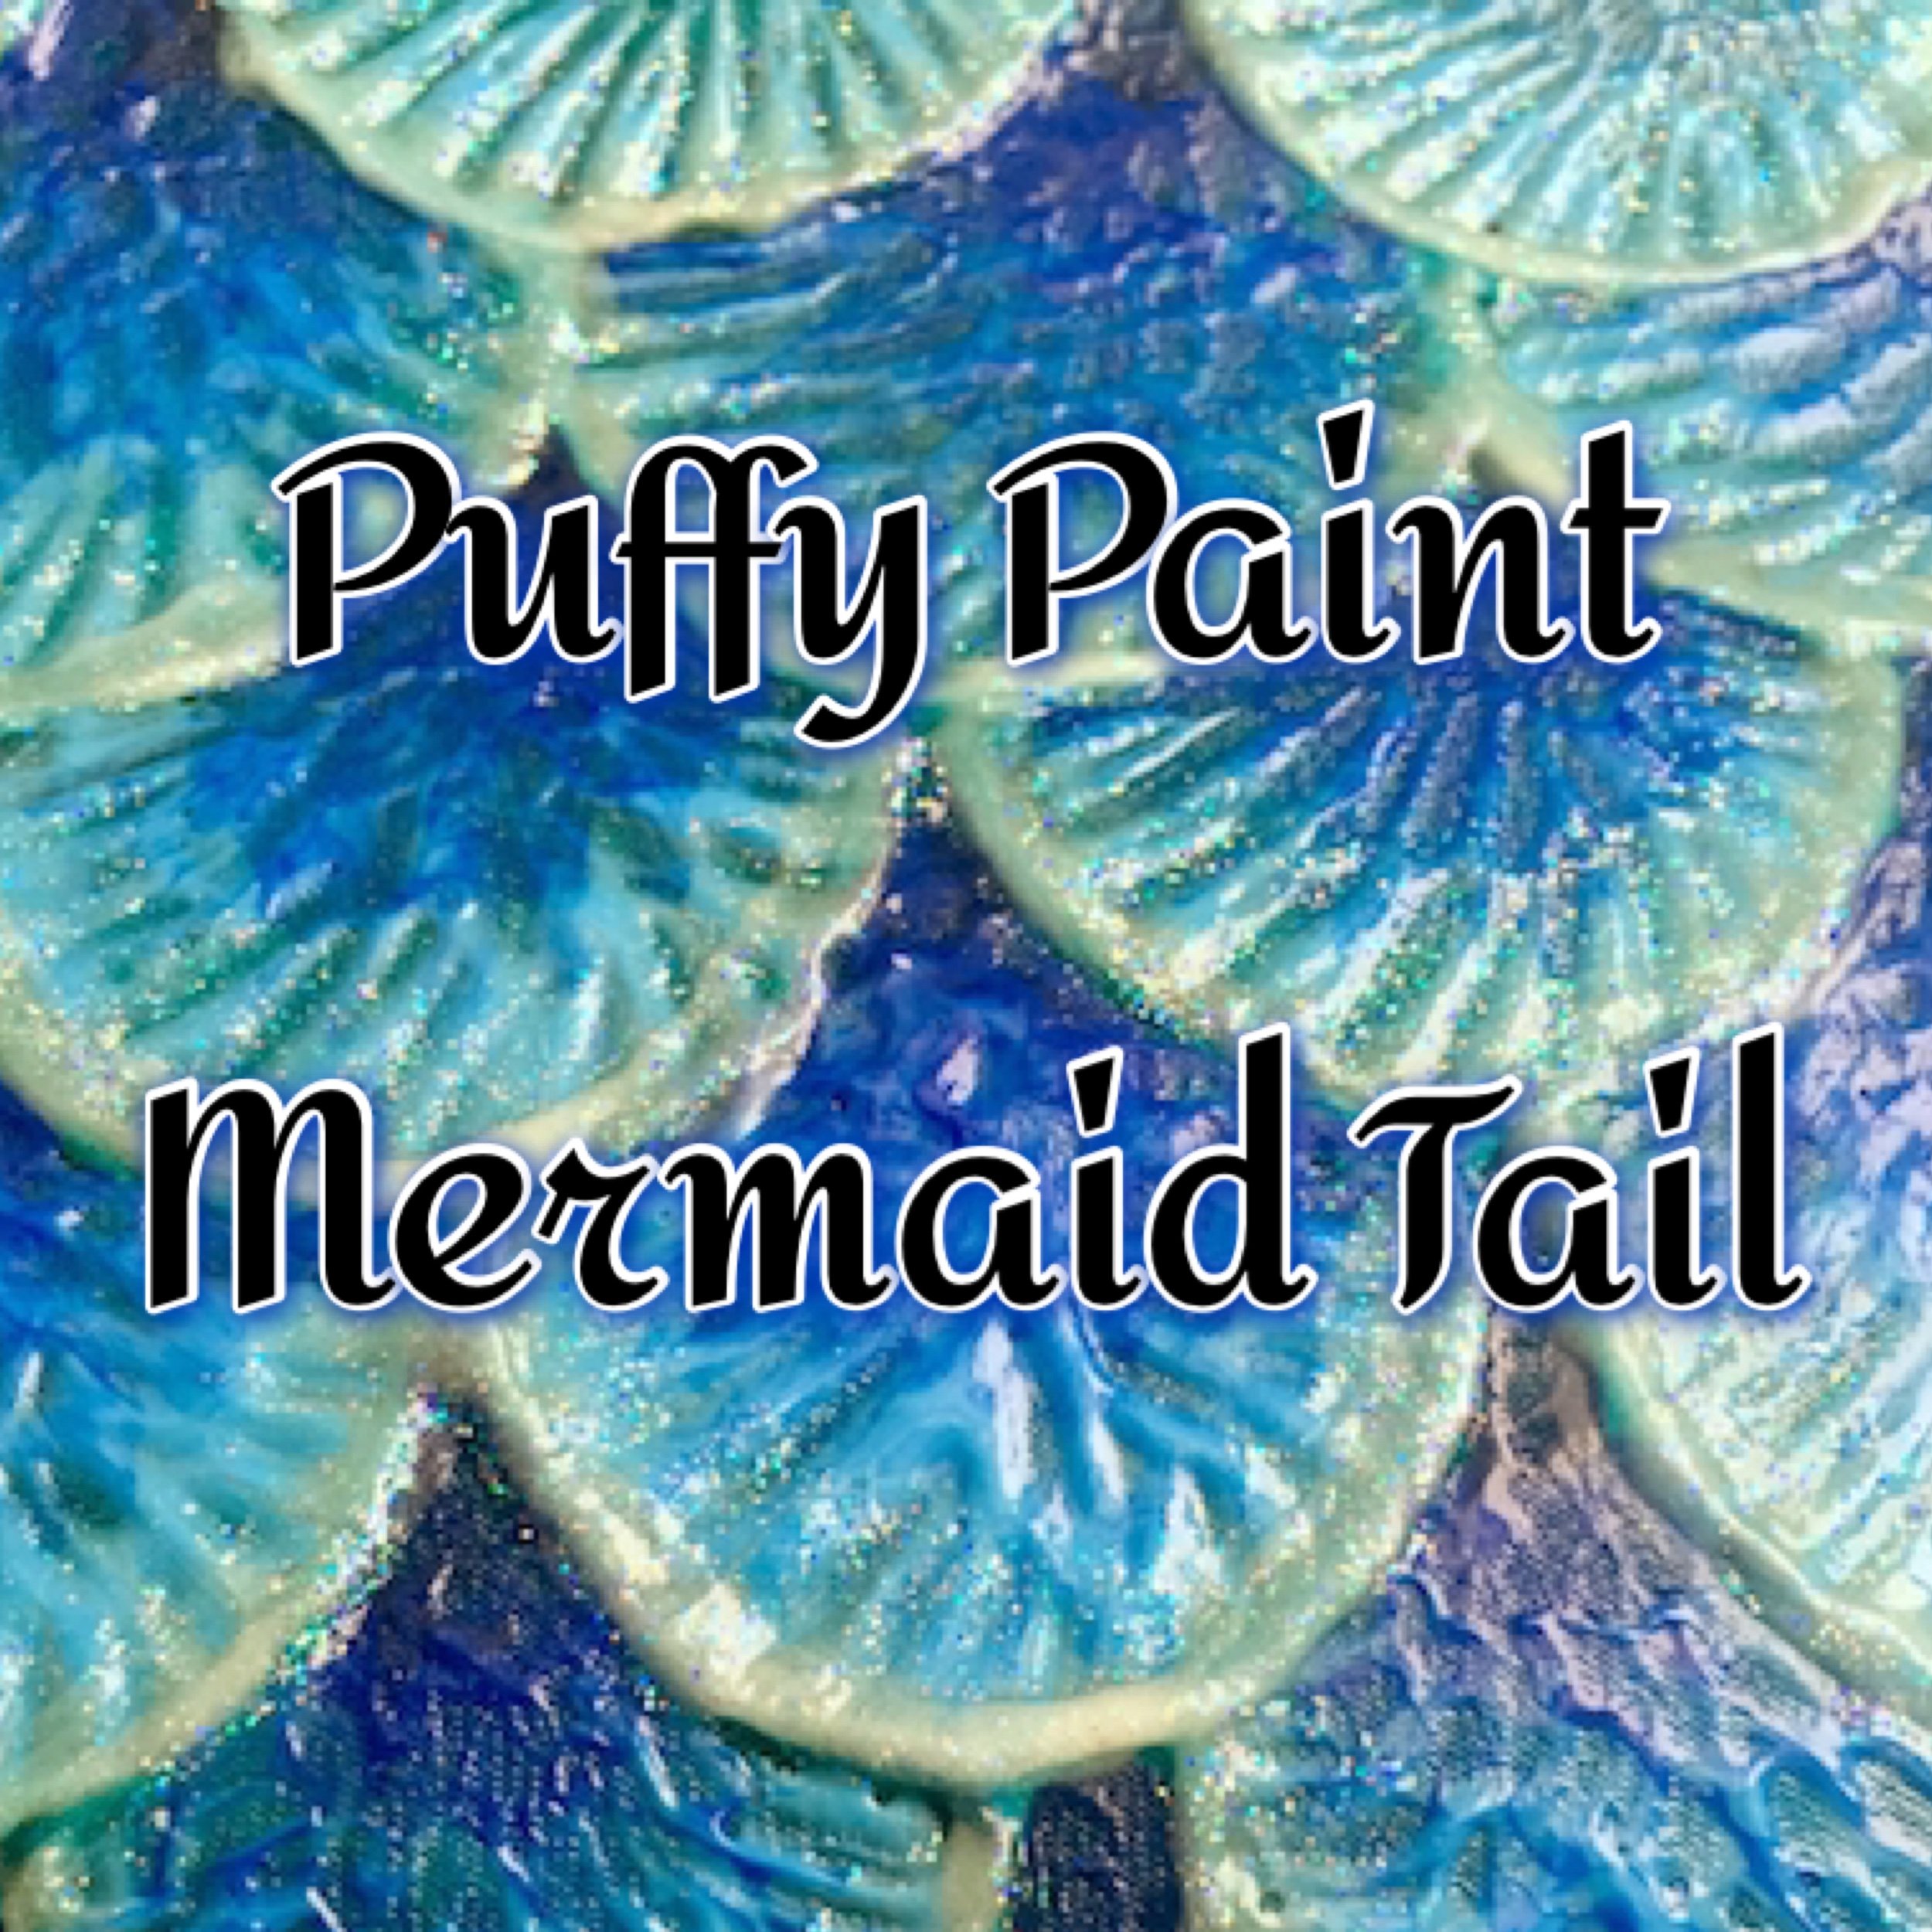 Puffy Paint Mermaid Tail